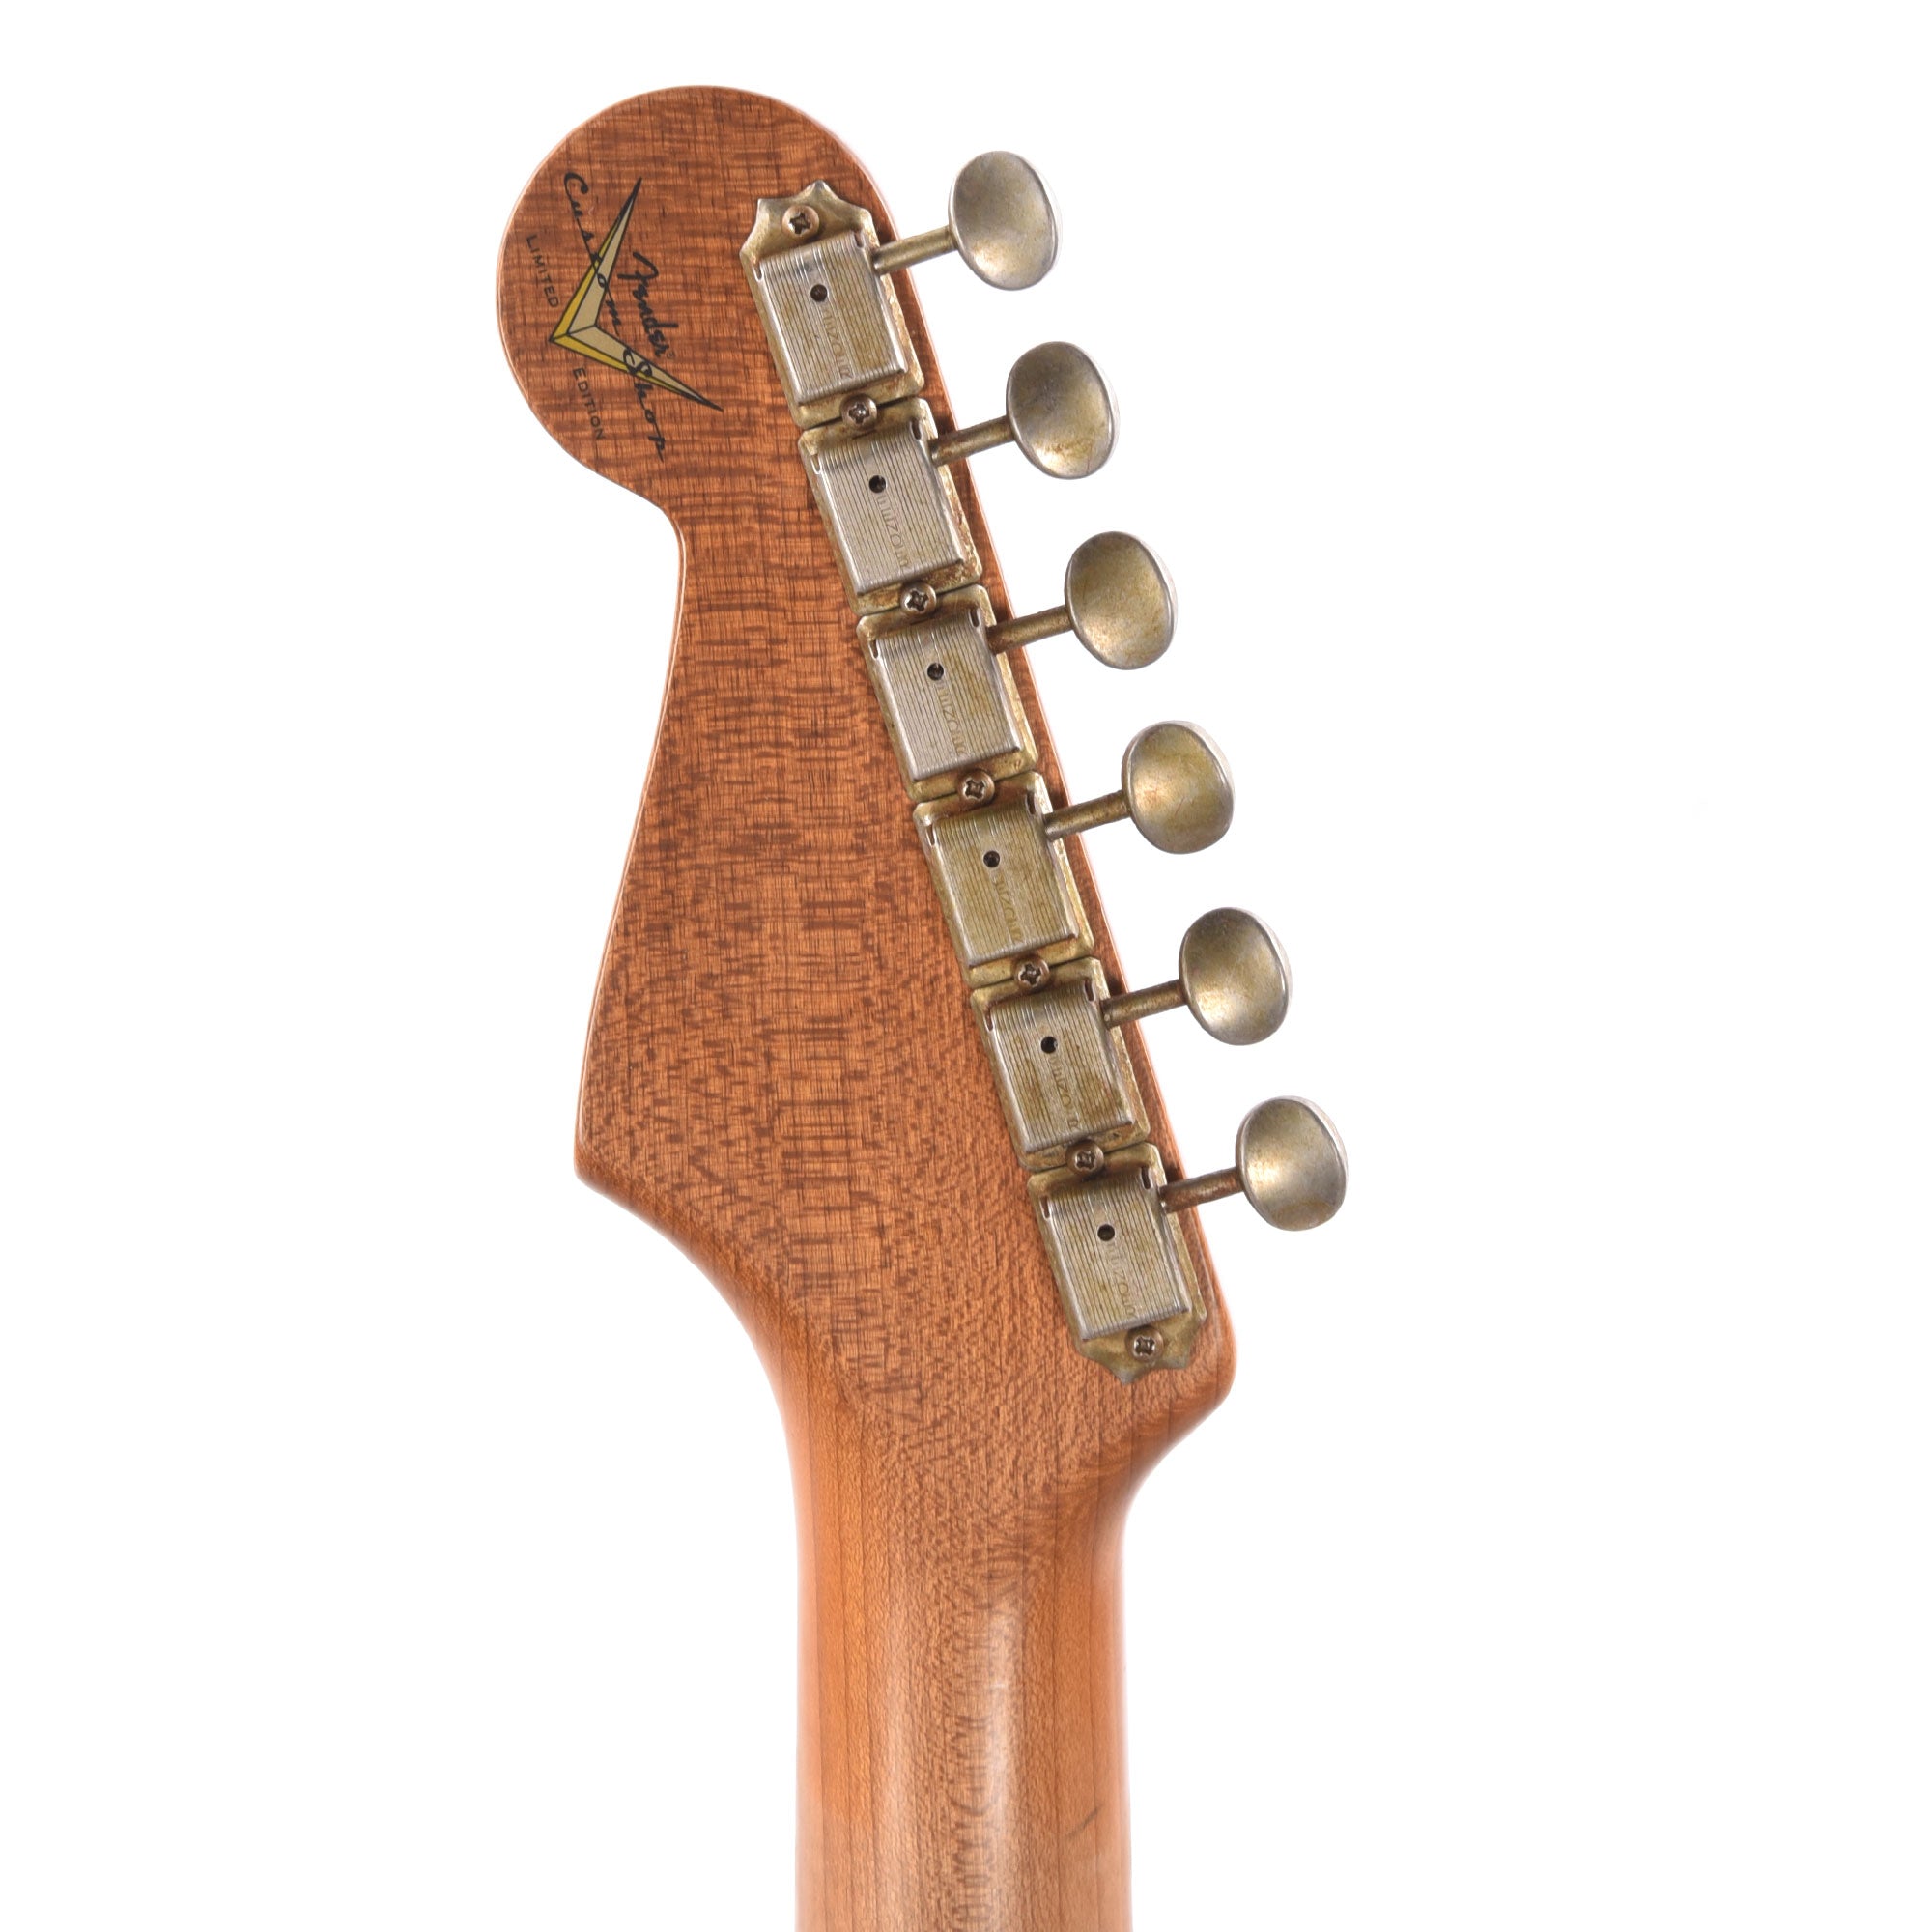 Fender Custom Shop Limited Edition Roasted '54 Stratocaster Journeyman Relic '55 Desert Tan